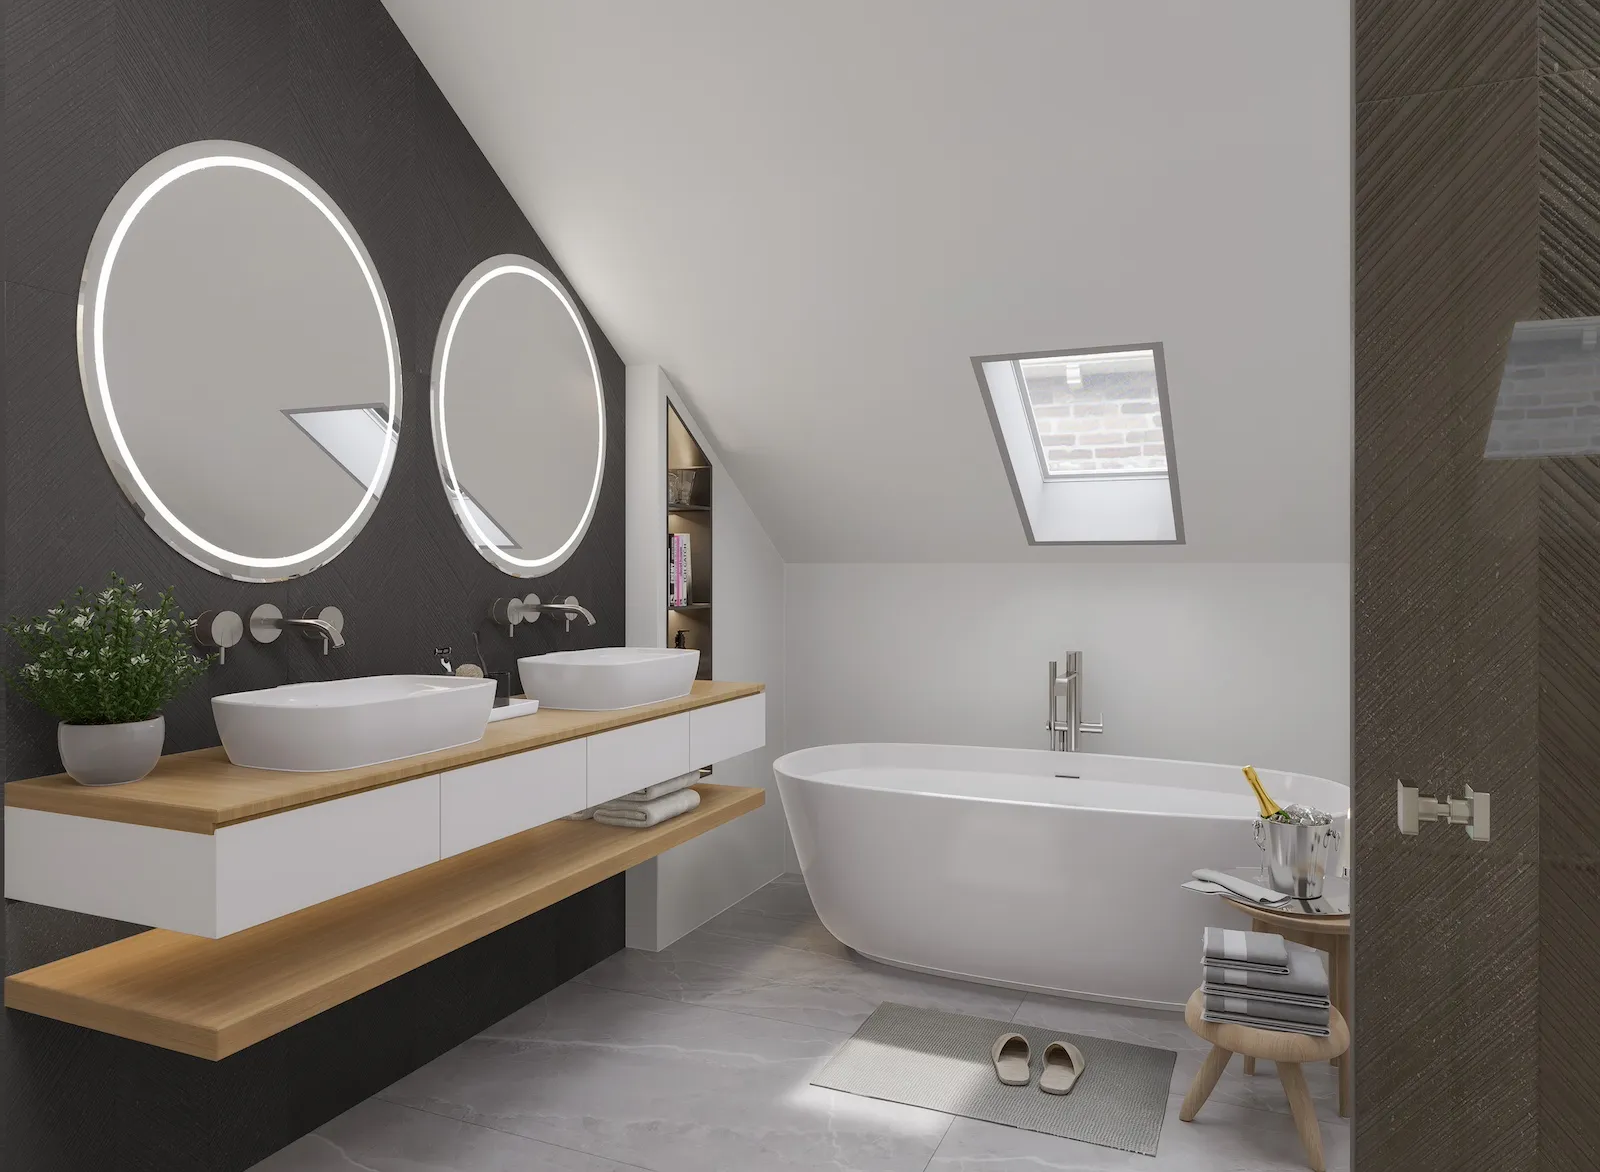 Medium bathroom after 3d rendering design